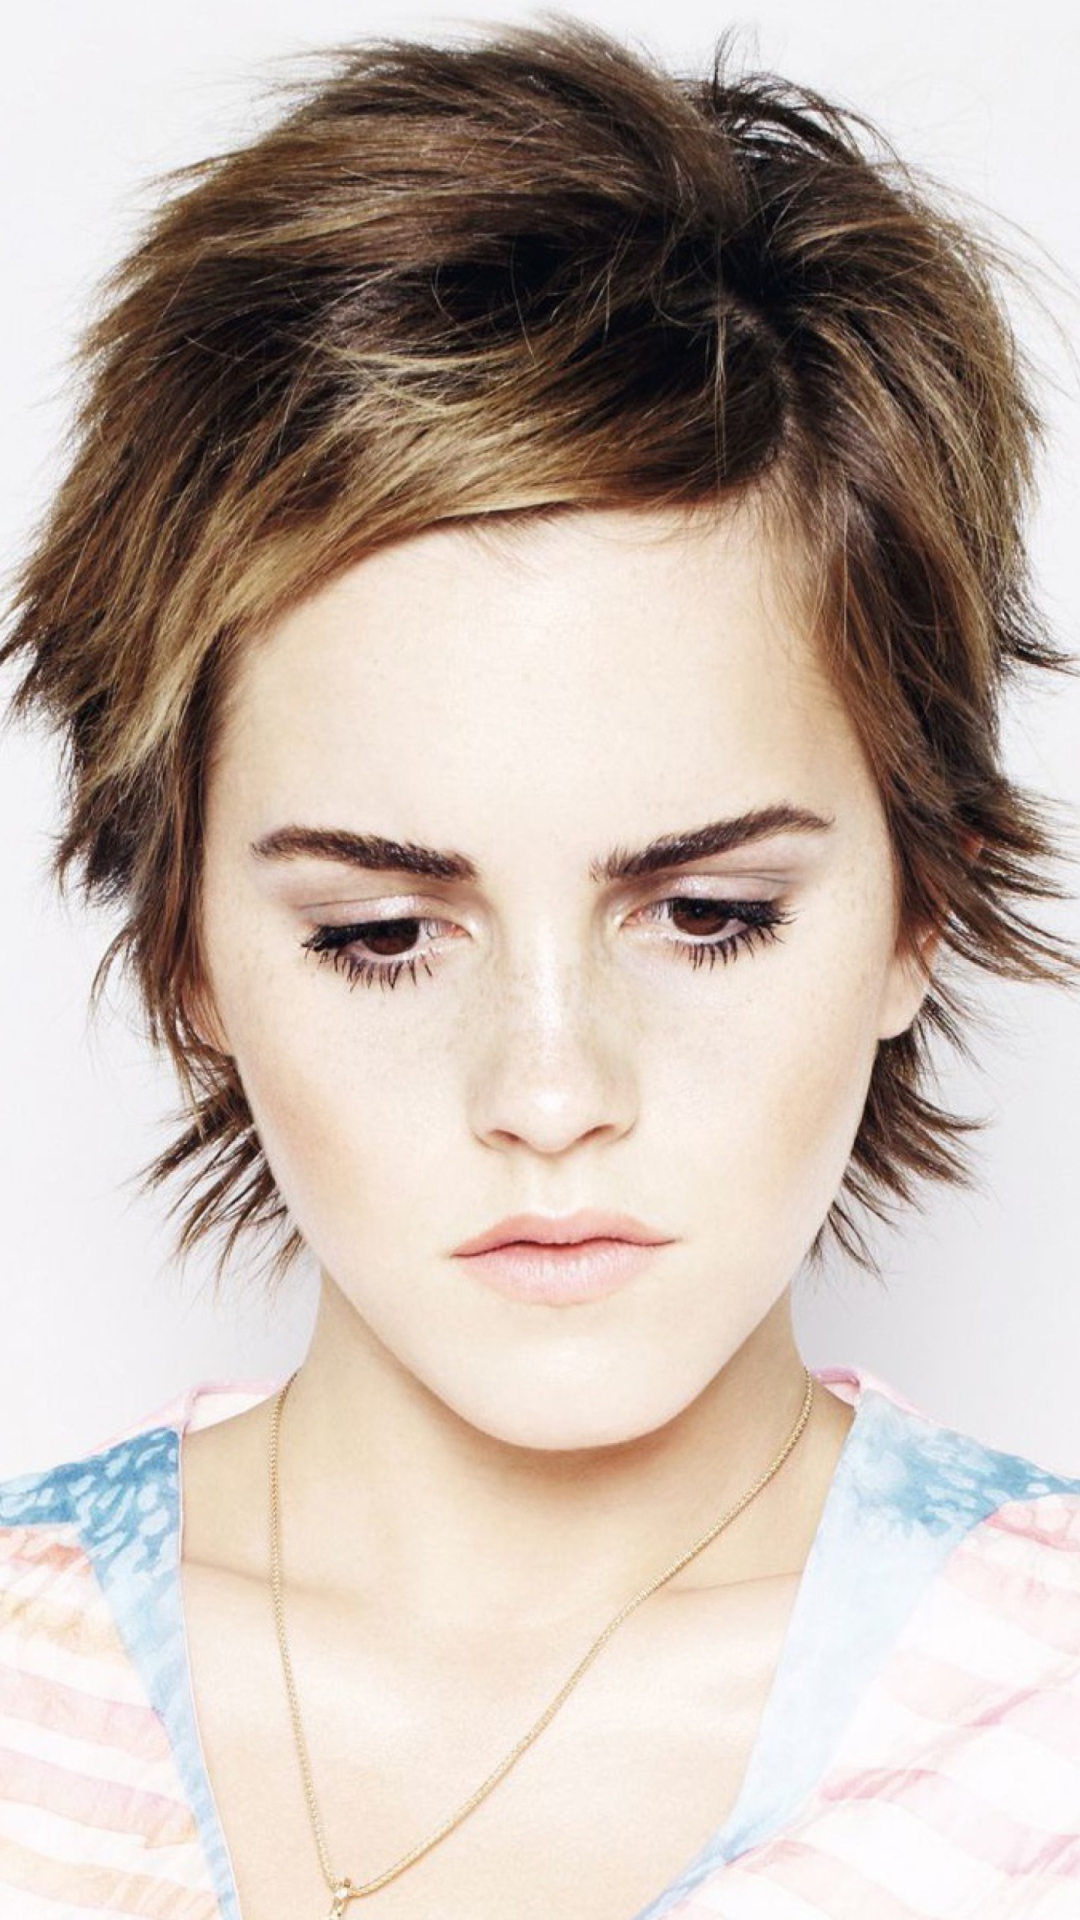 Emma Watson wallpaper 1080x1920